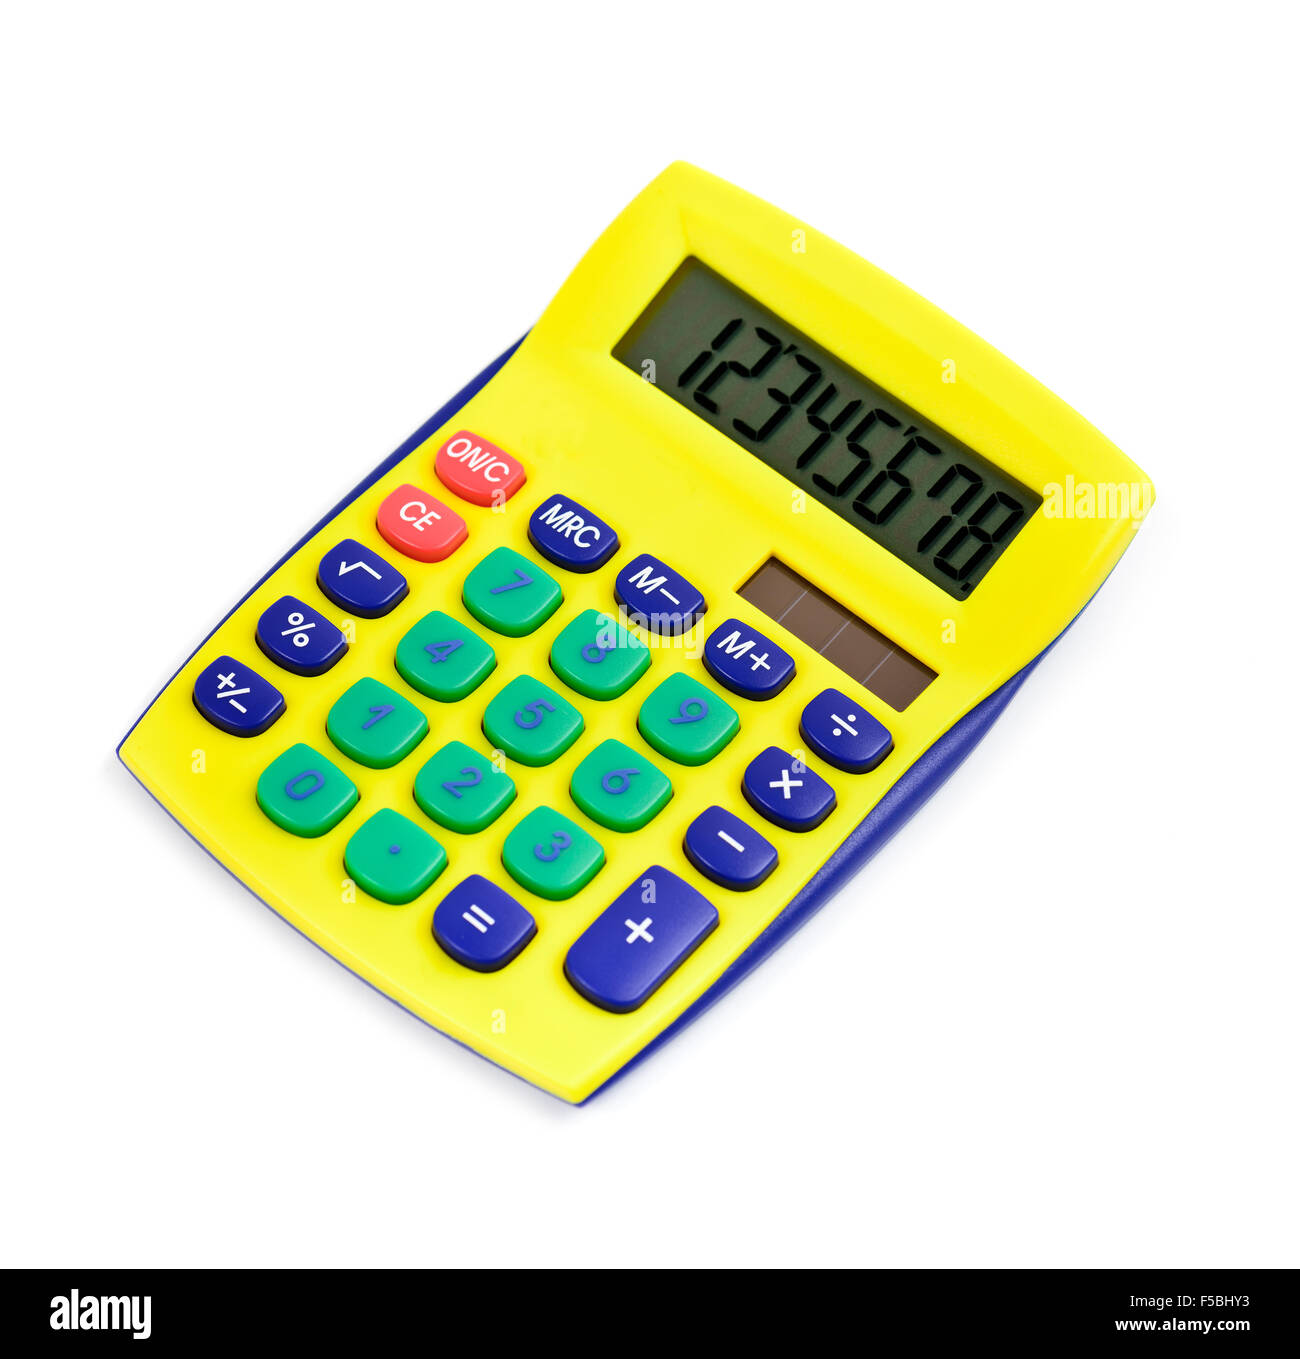 Calculadora moderna de color amarillo aislado en blanco Foto de stock